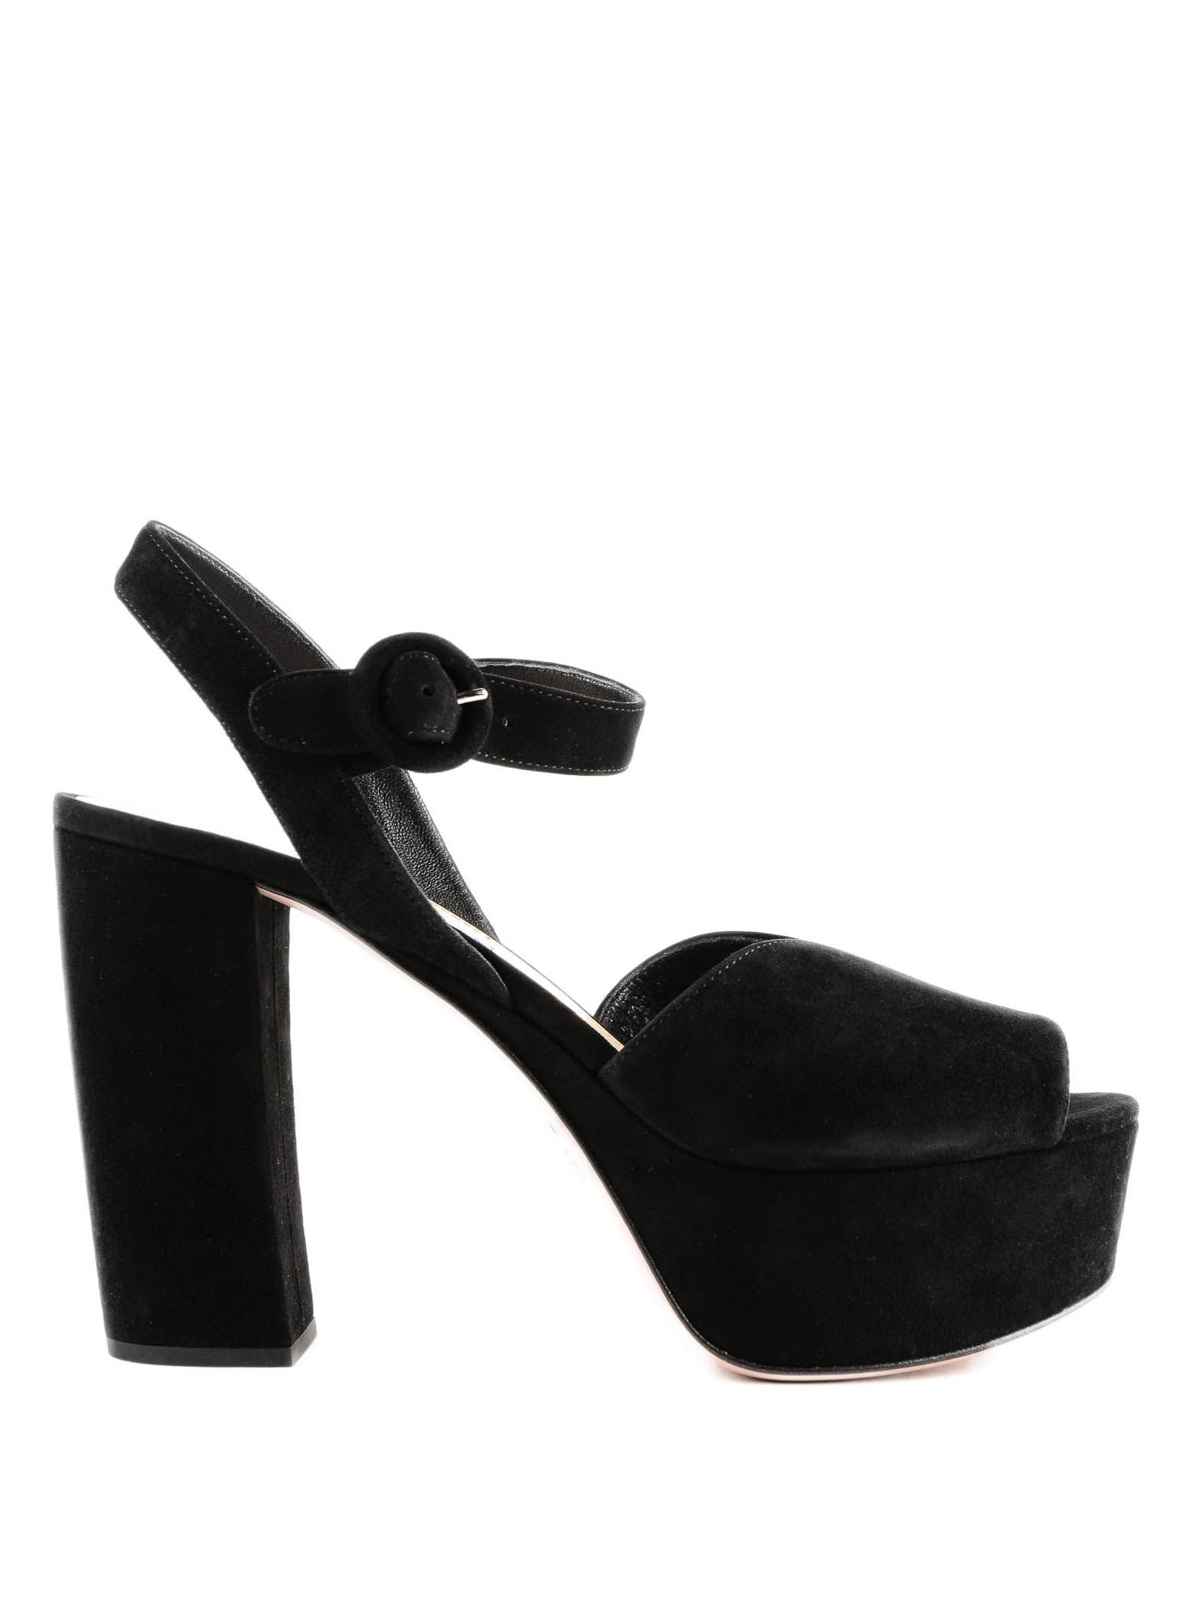 prada black suede platform sandals